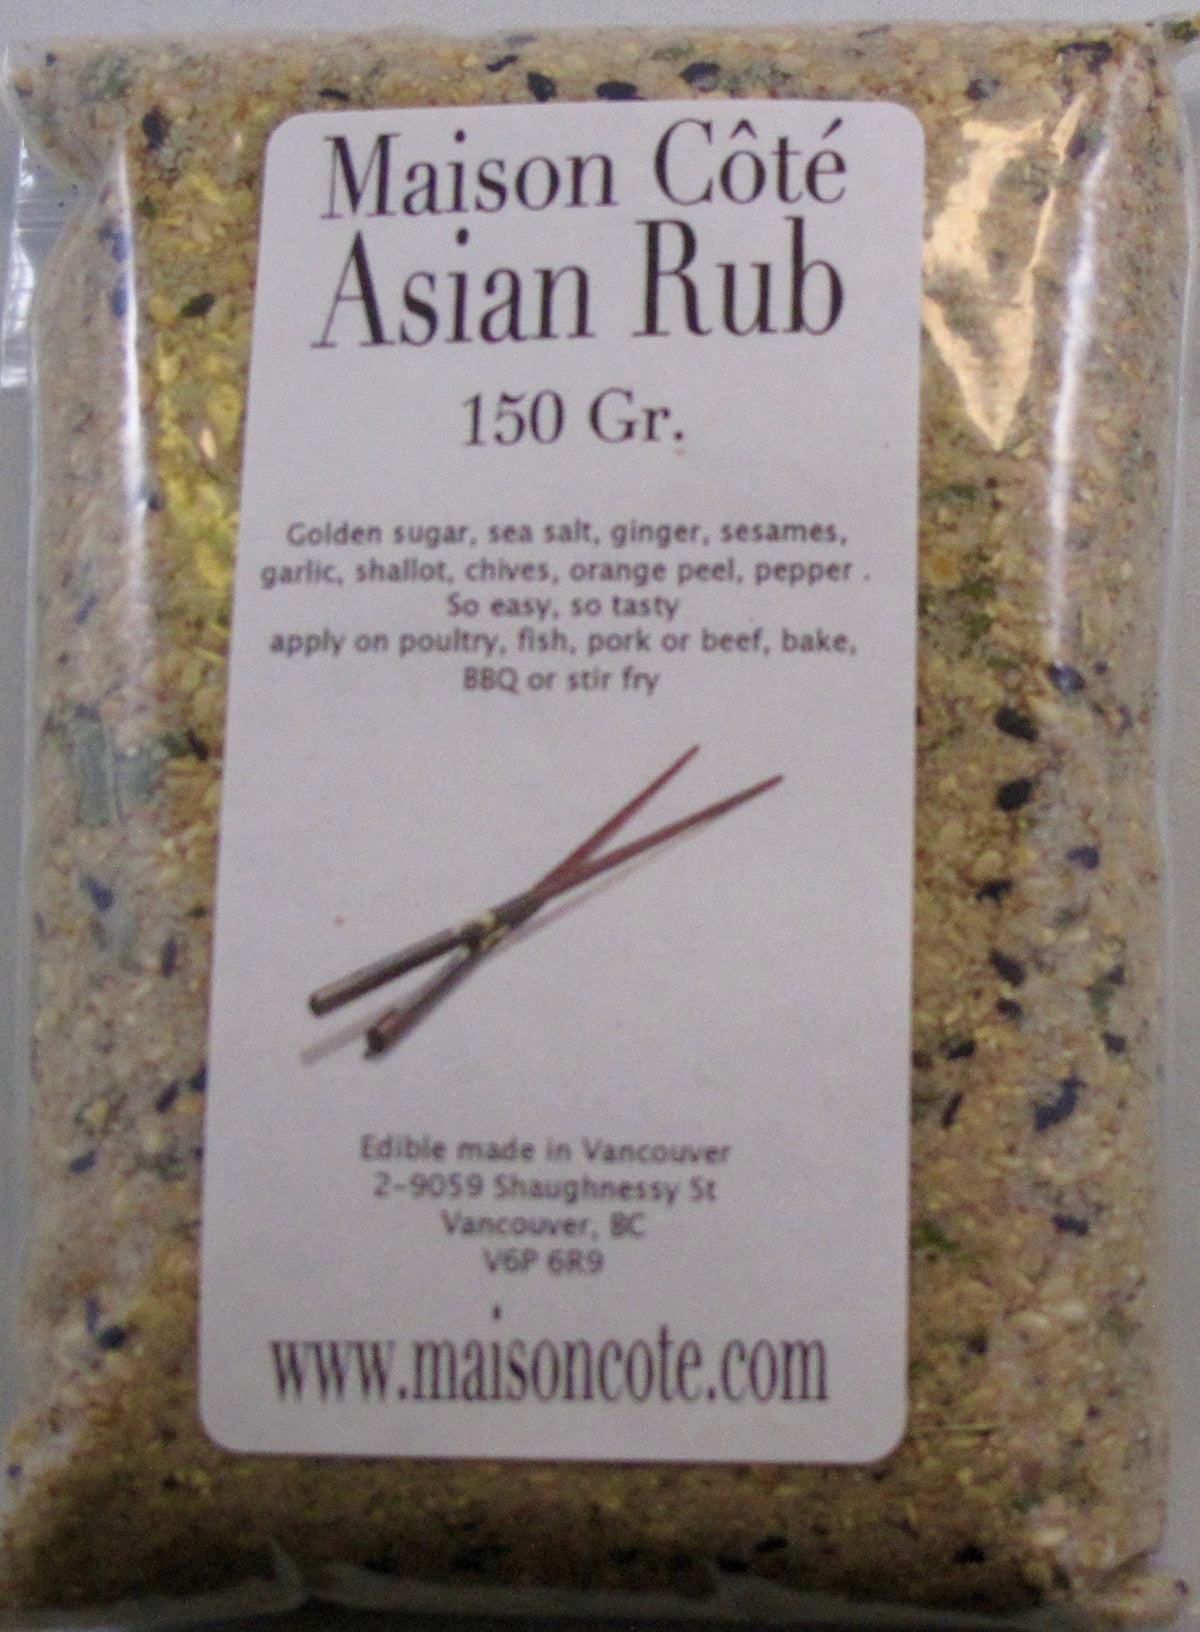 Asian Rub